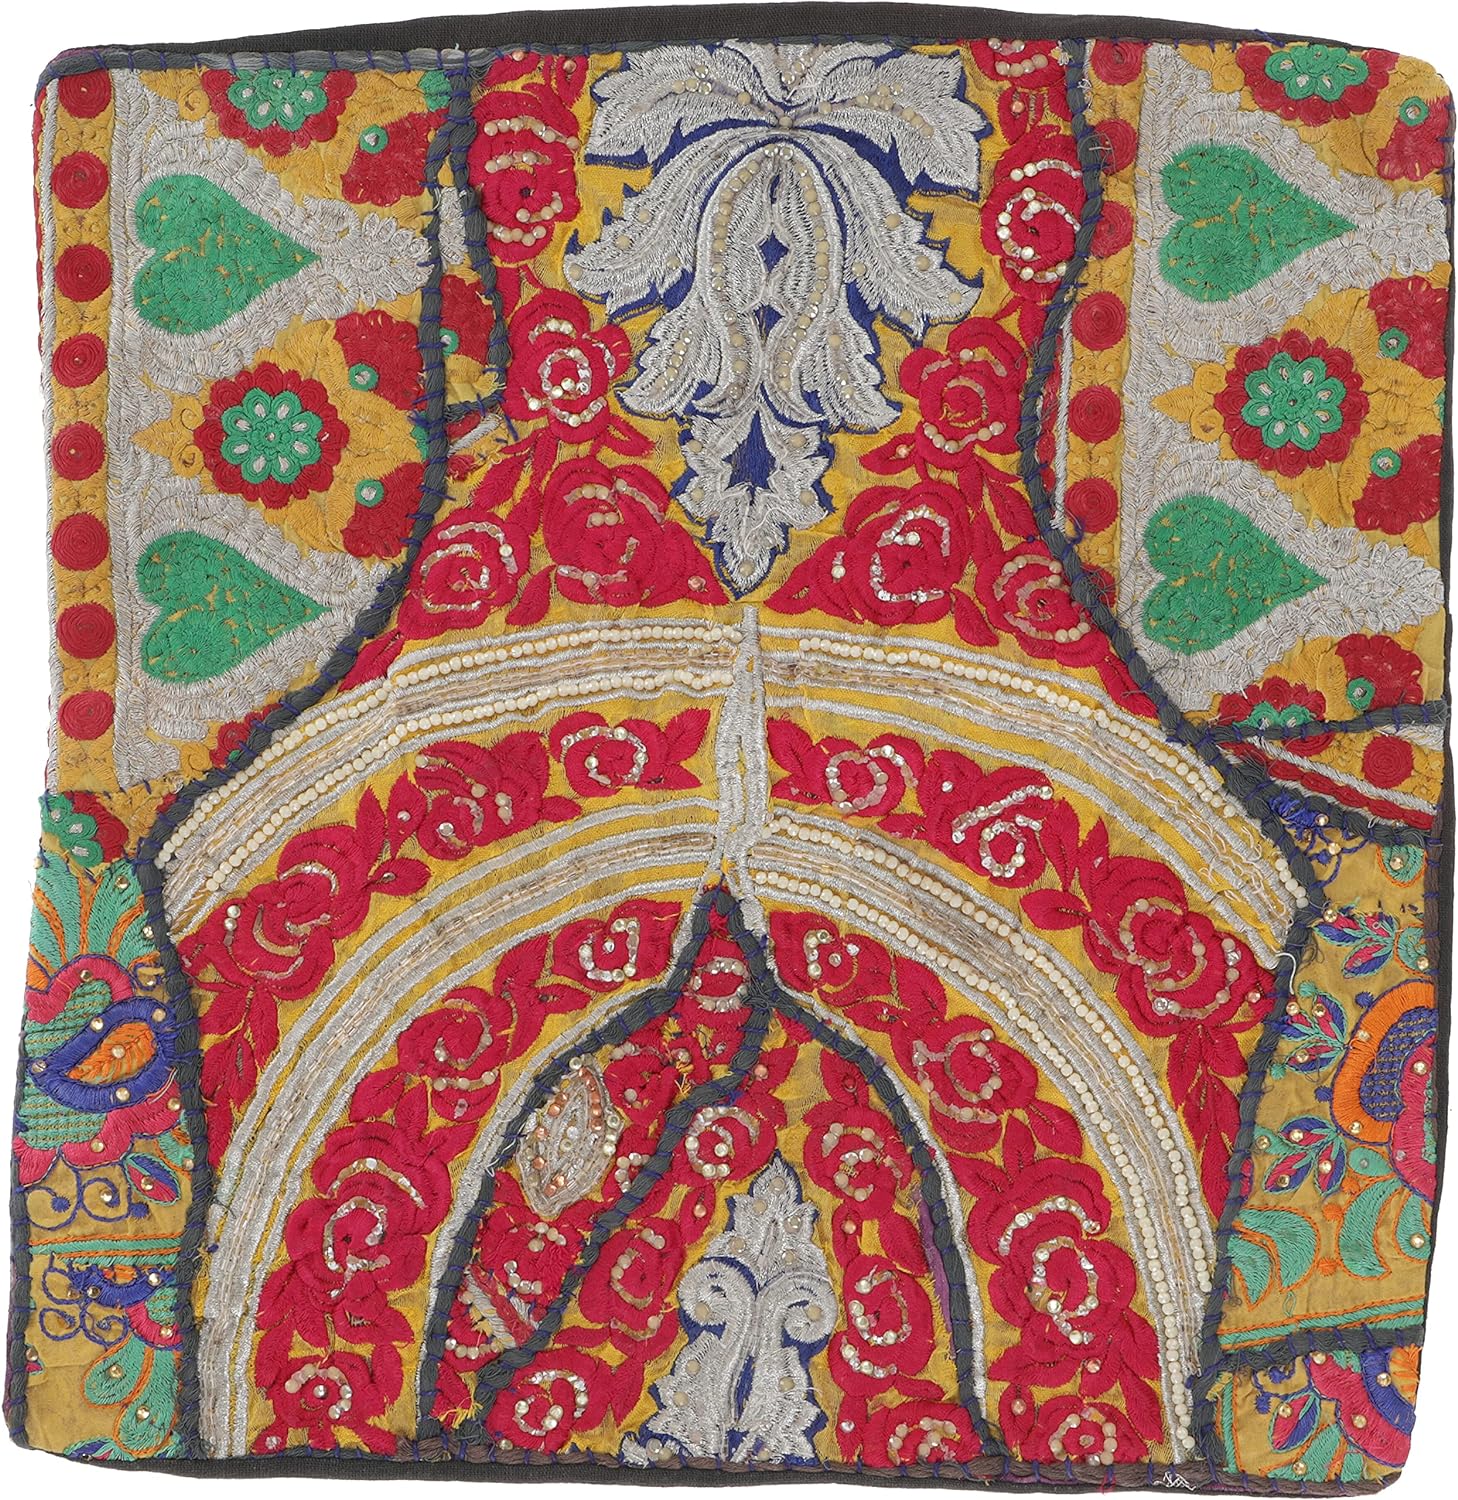 Guru-Shop GURU SHOP Patchwork Cushion Cover, Decorative Cushion Cover Made of Rajasthan, Single Piece, Pattern 4, Purple, Cotton, 40 x 40 cm, Decorative Cushion, Sofa Cushion